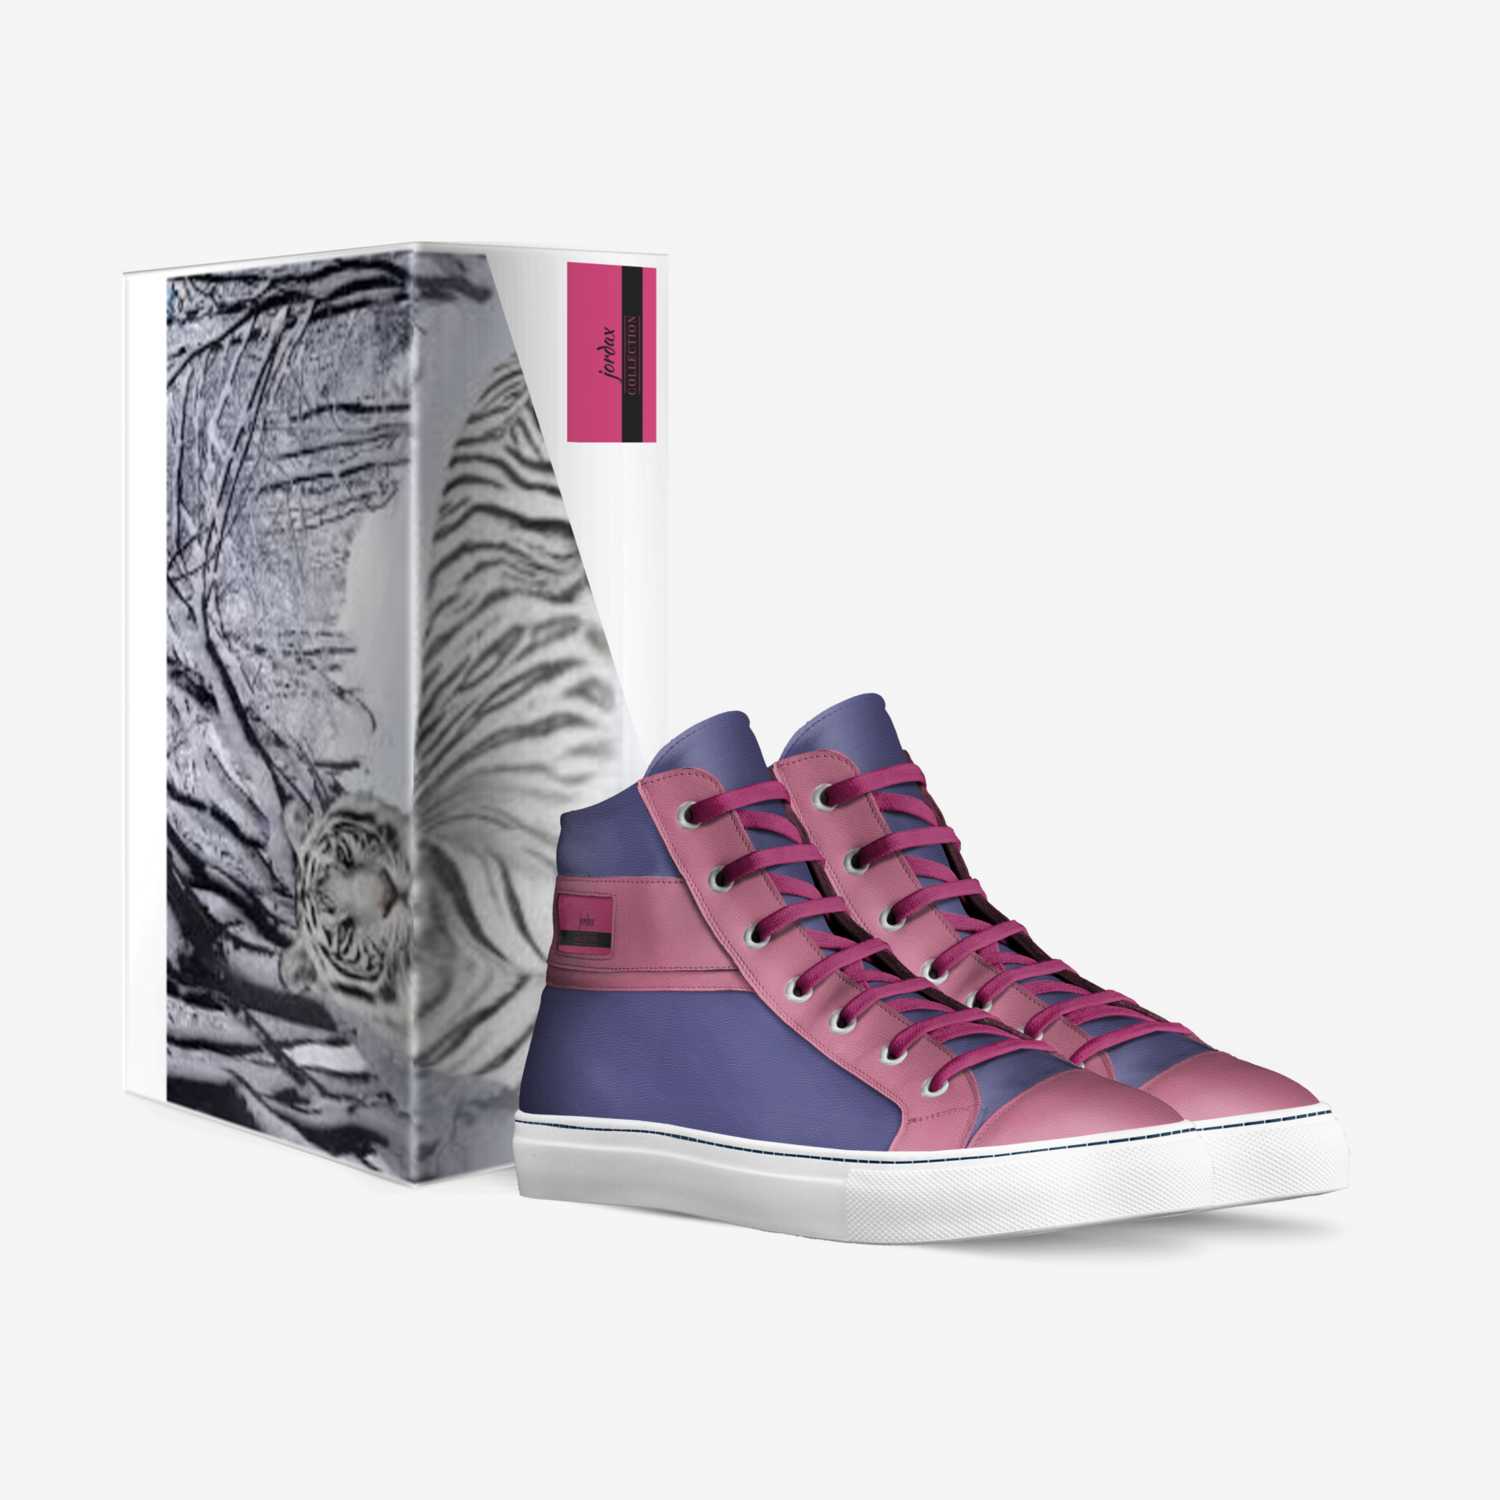 jordax custom made in Italy shoes by Jasmine Benjamin | Box view